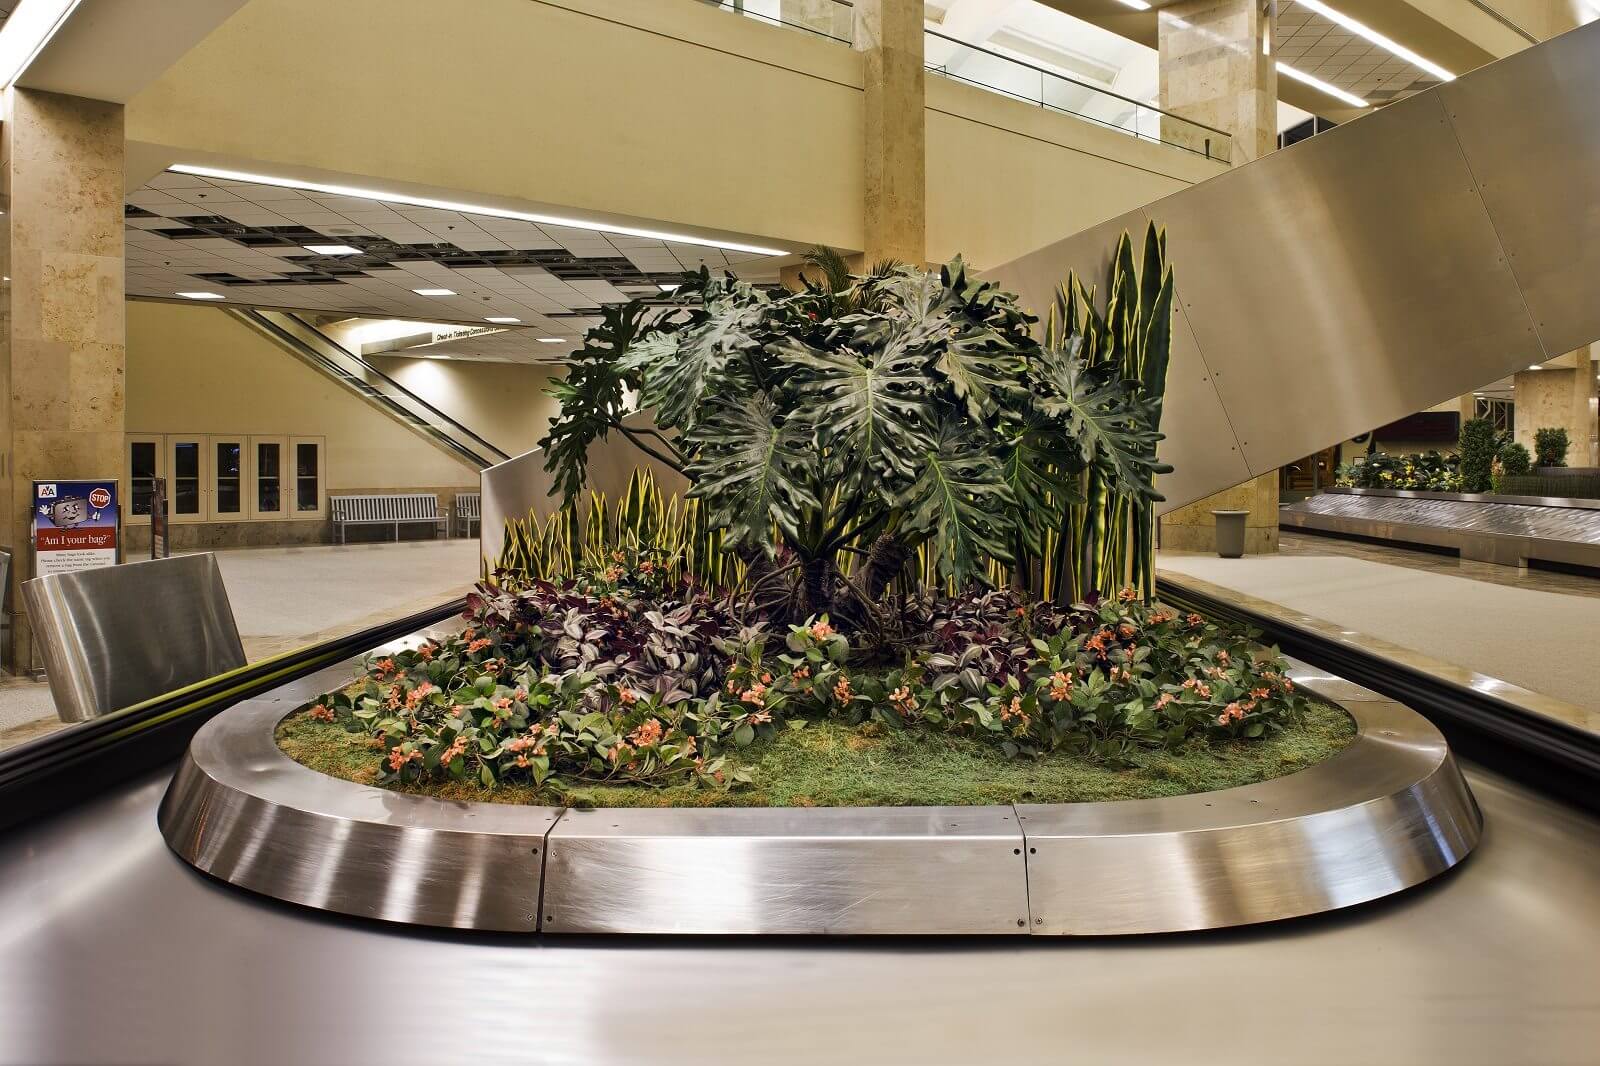 Fabricated Trees and Plants enhance baggage claim at John Wayne Airport